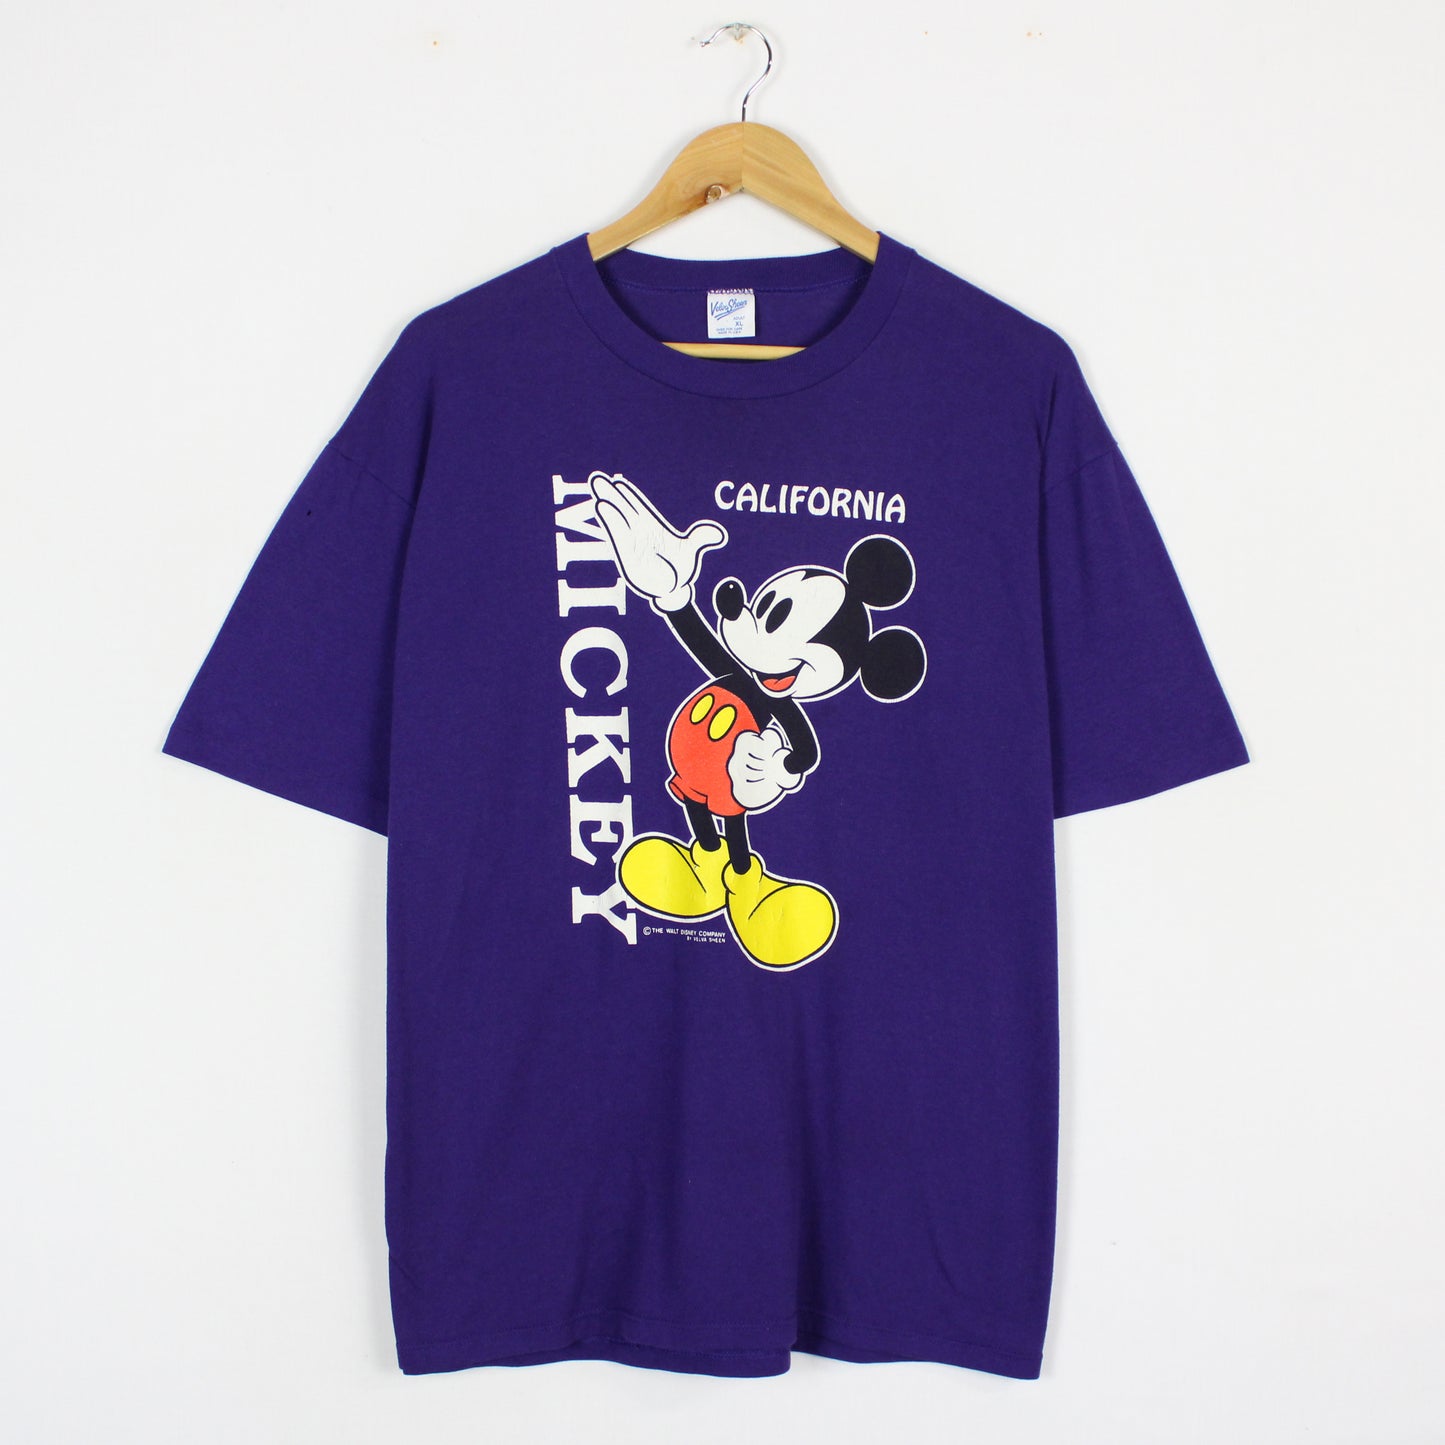 Vintage 80s Mickey Mouse Disney Tee - XL